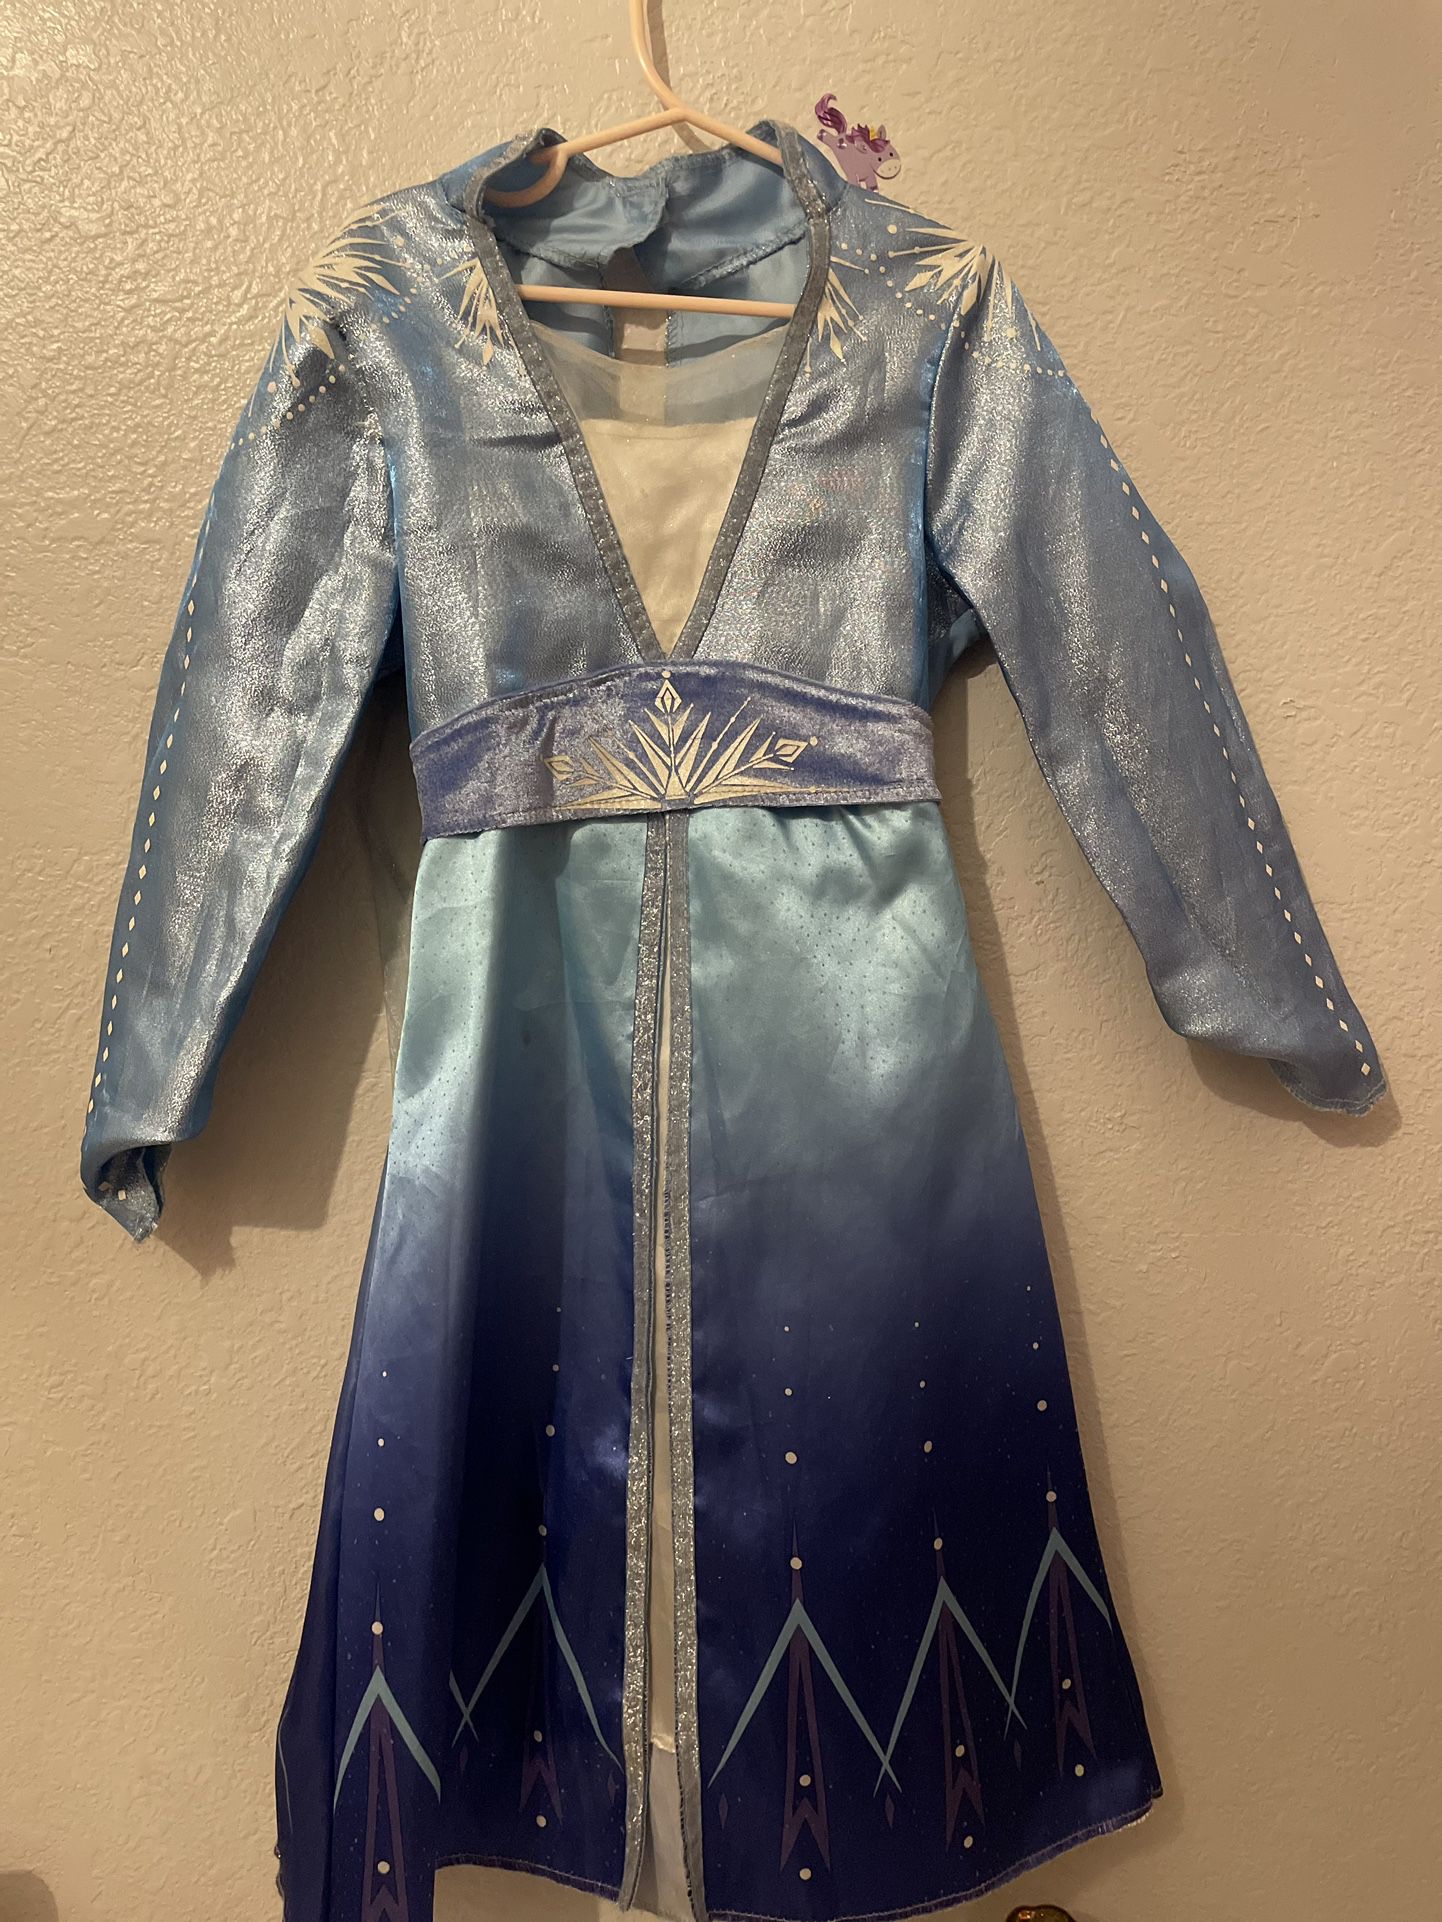 Frozen Elsa Costume Dress $2